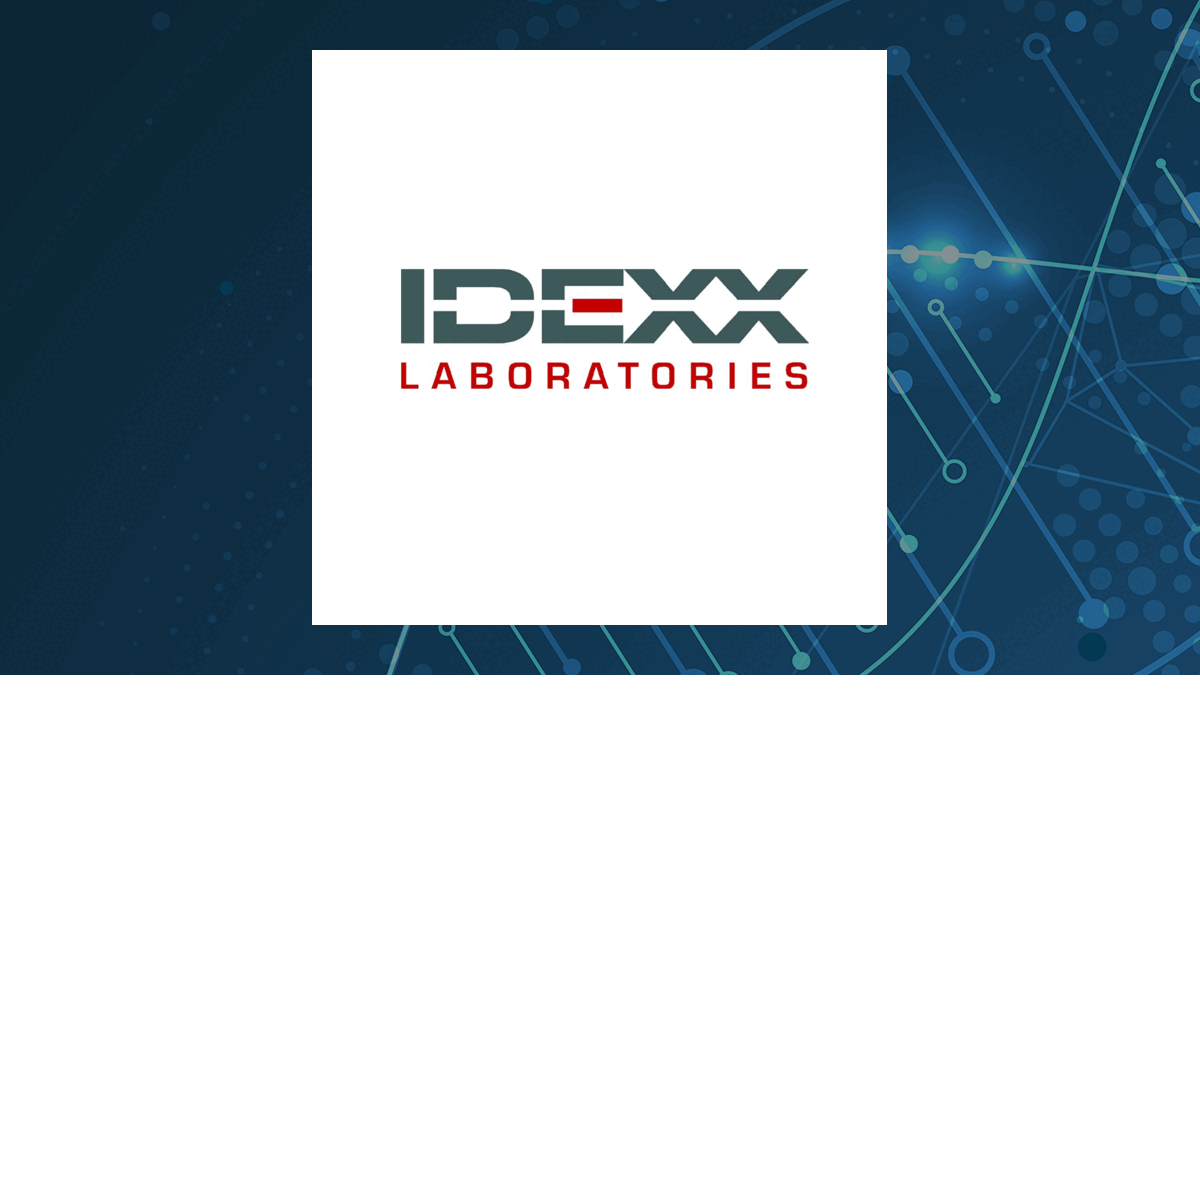 IDEXX Laboratories logo with Medical background